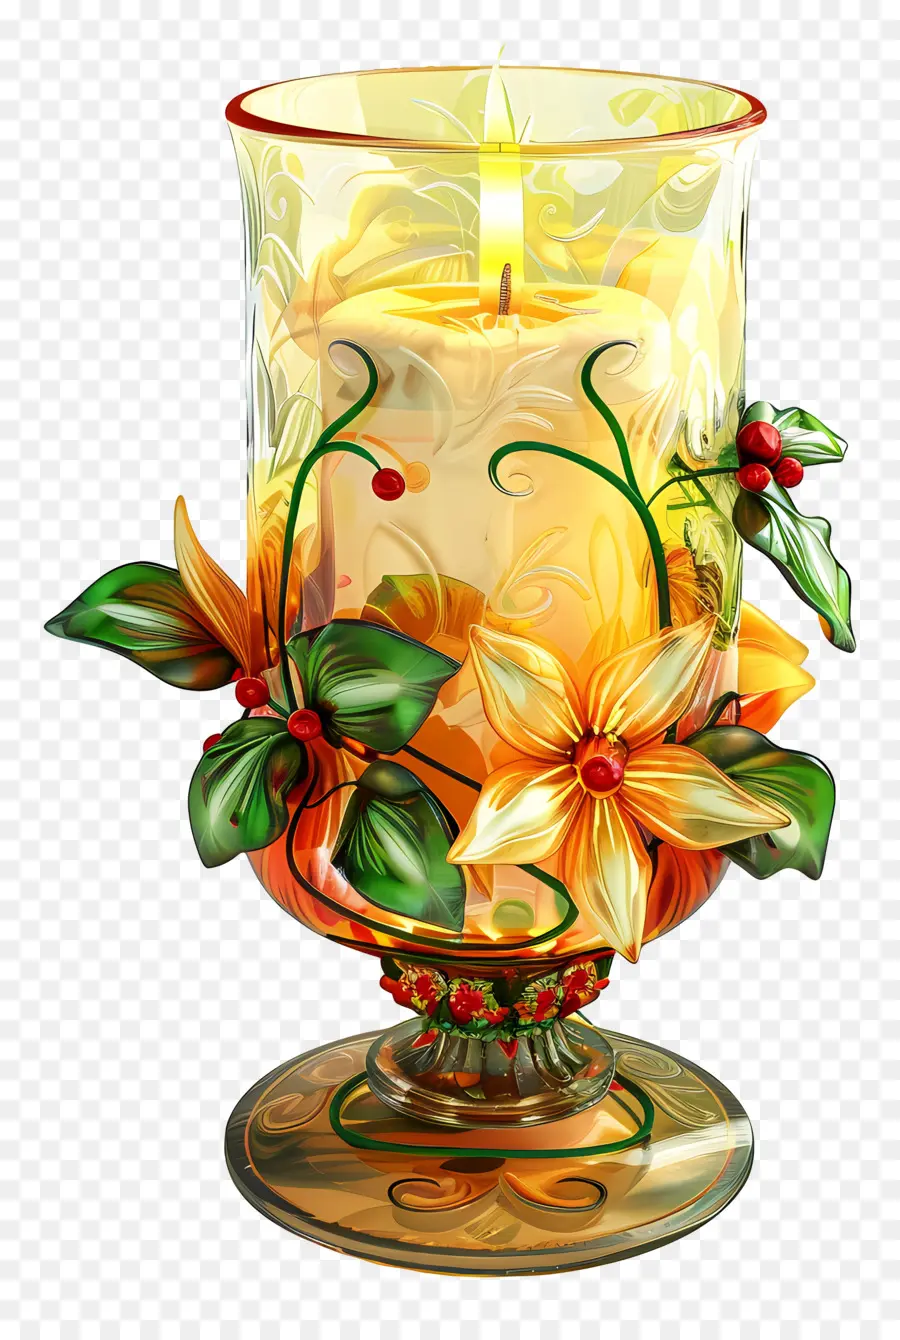 Glaskerzenhalter Kerze Flamme Glaspodestblüten - Zündige Kerze mit lebendigen Blumen und Schatten